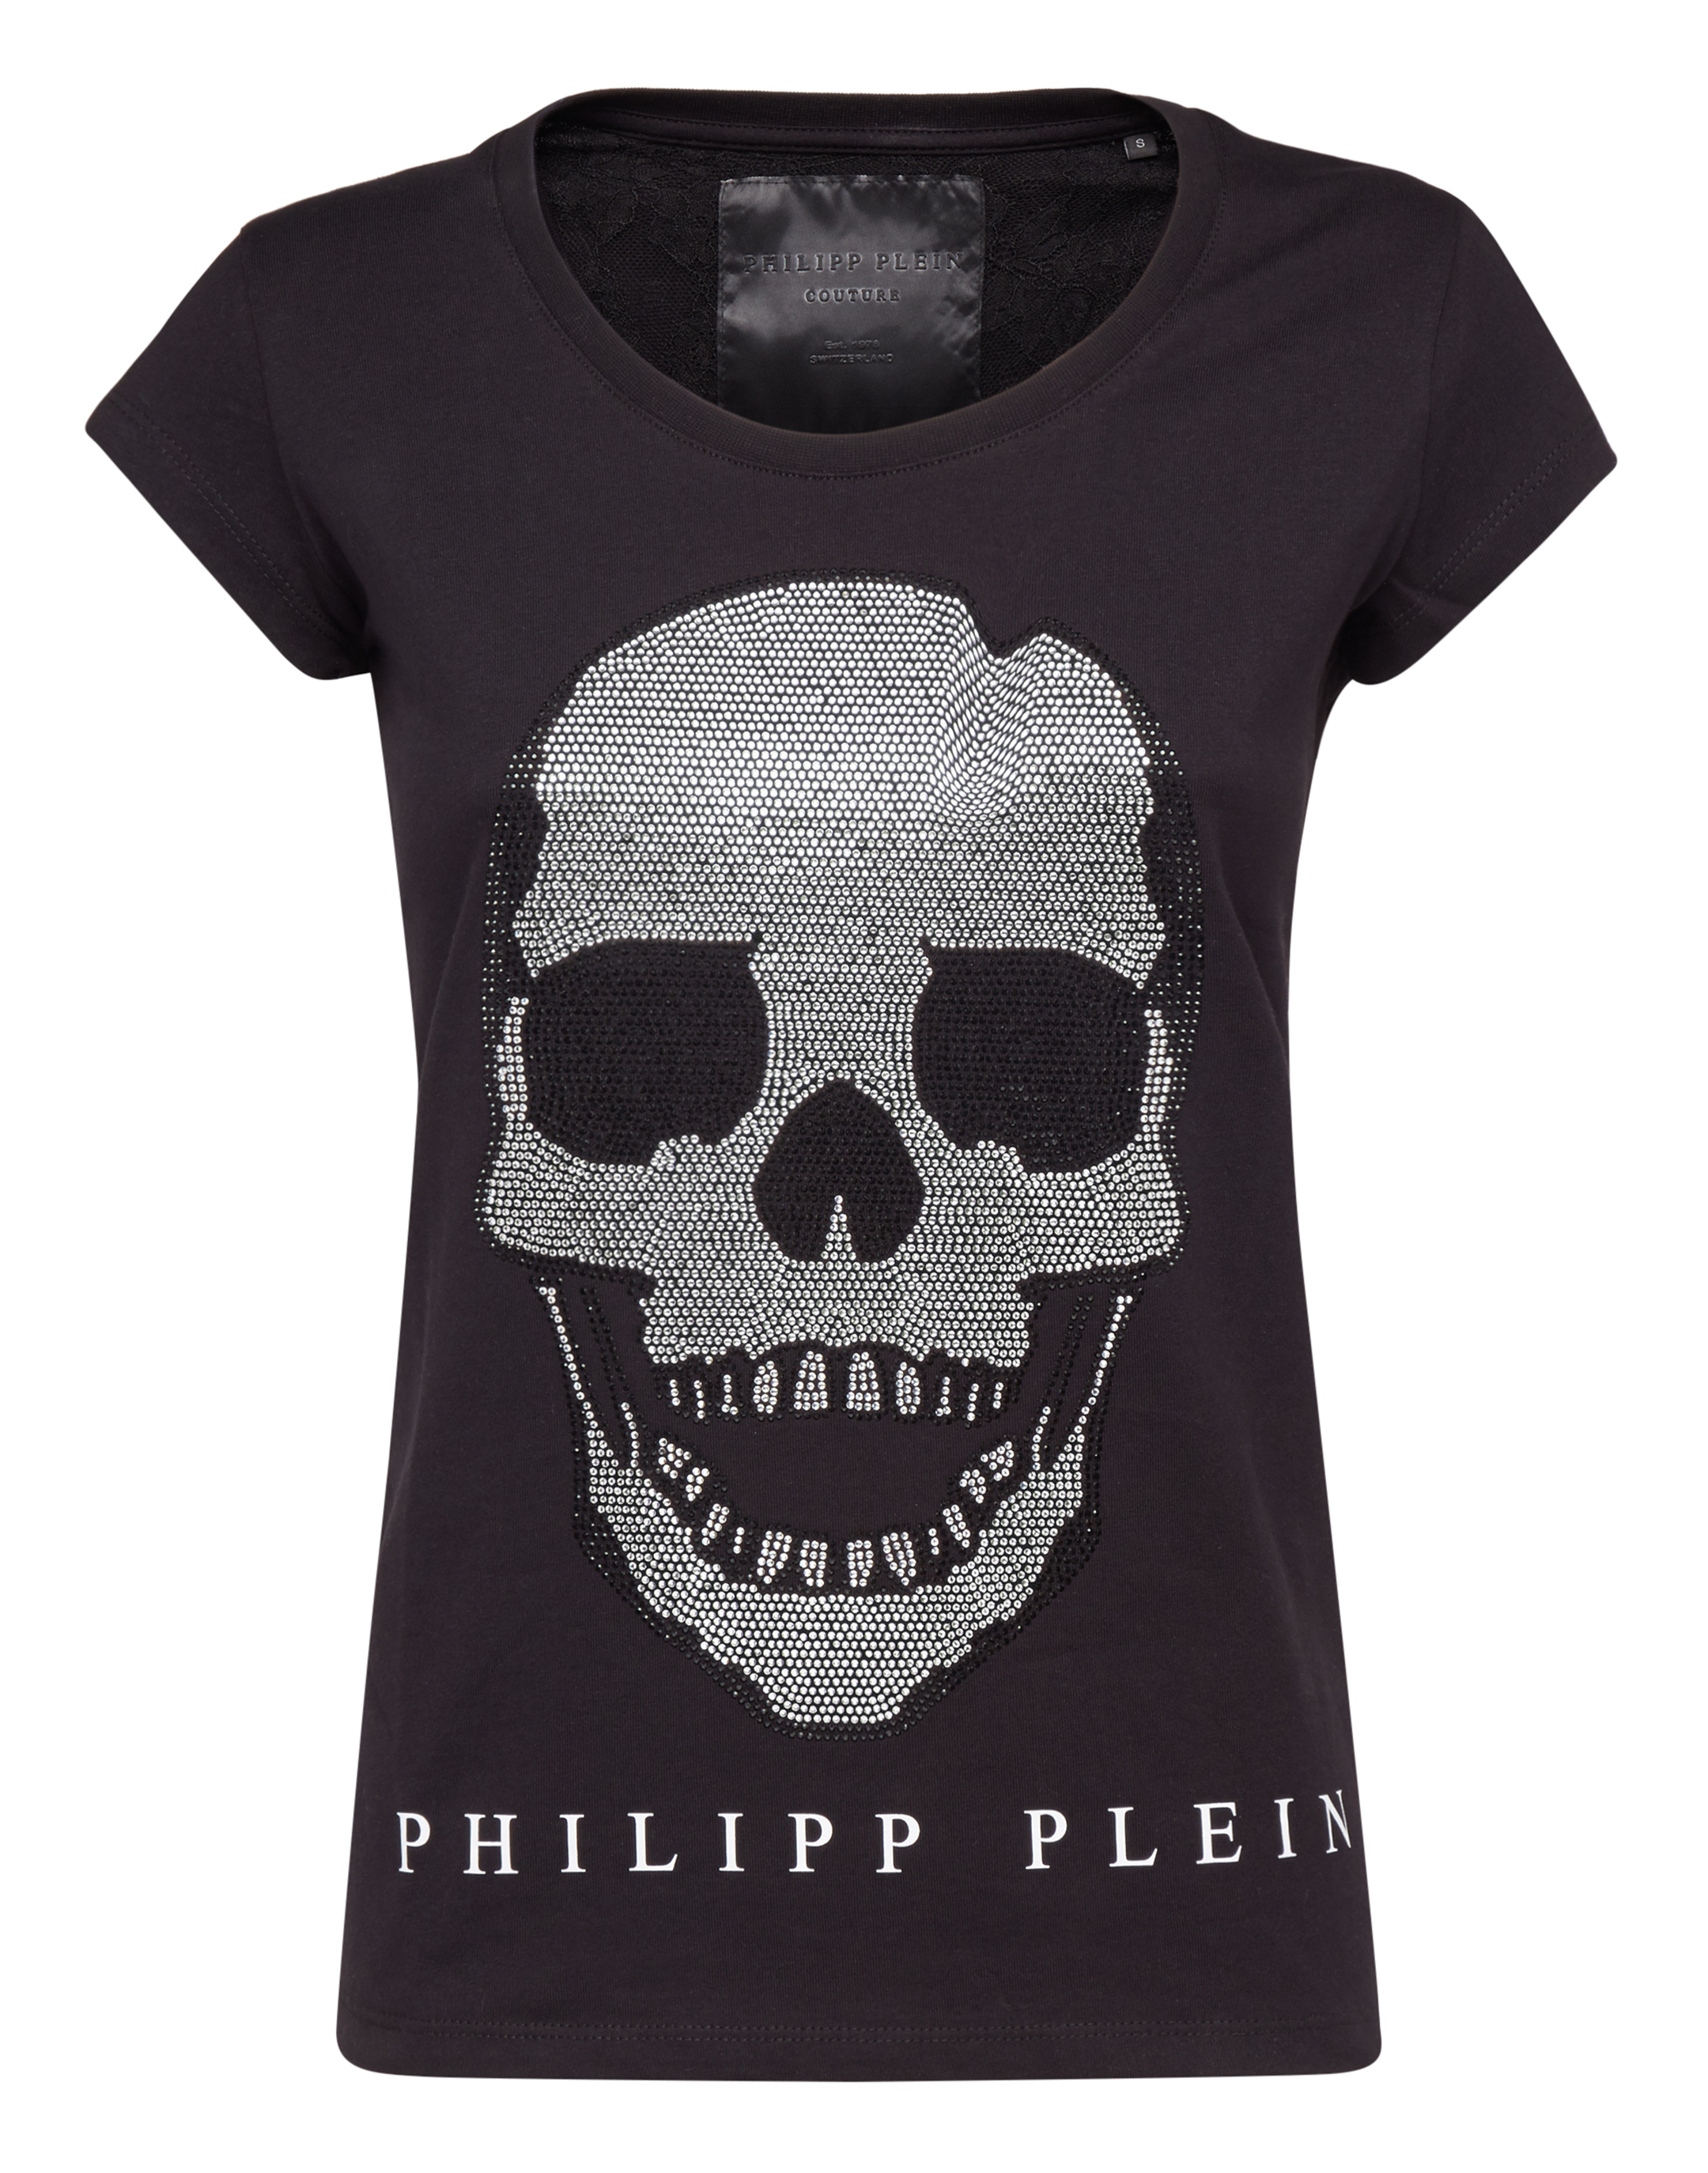 philipp plein couture t shirt